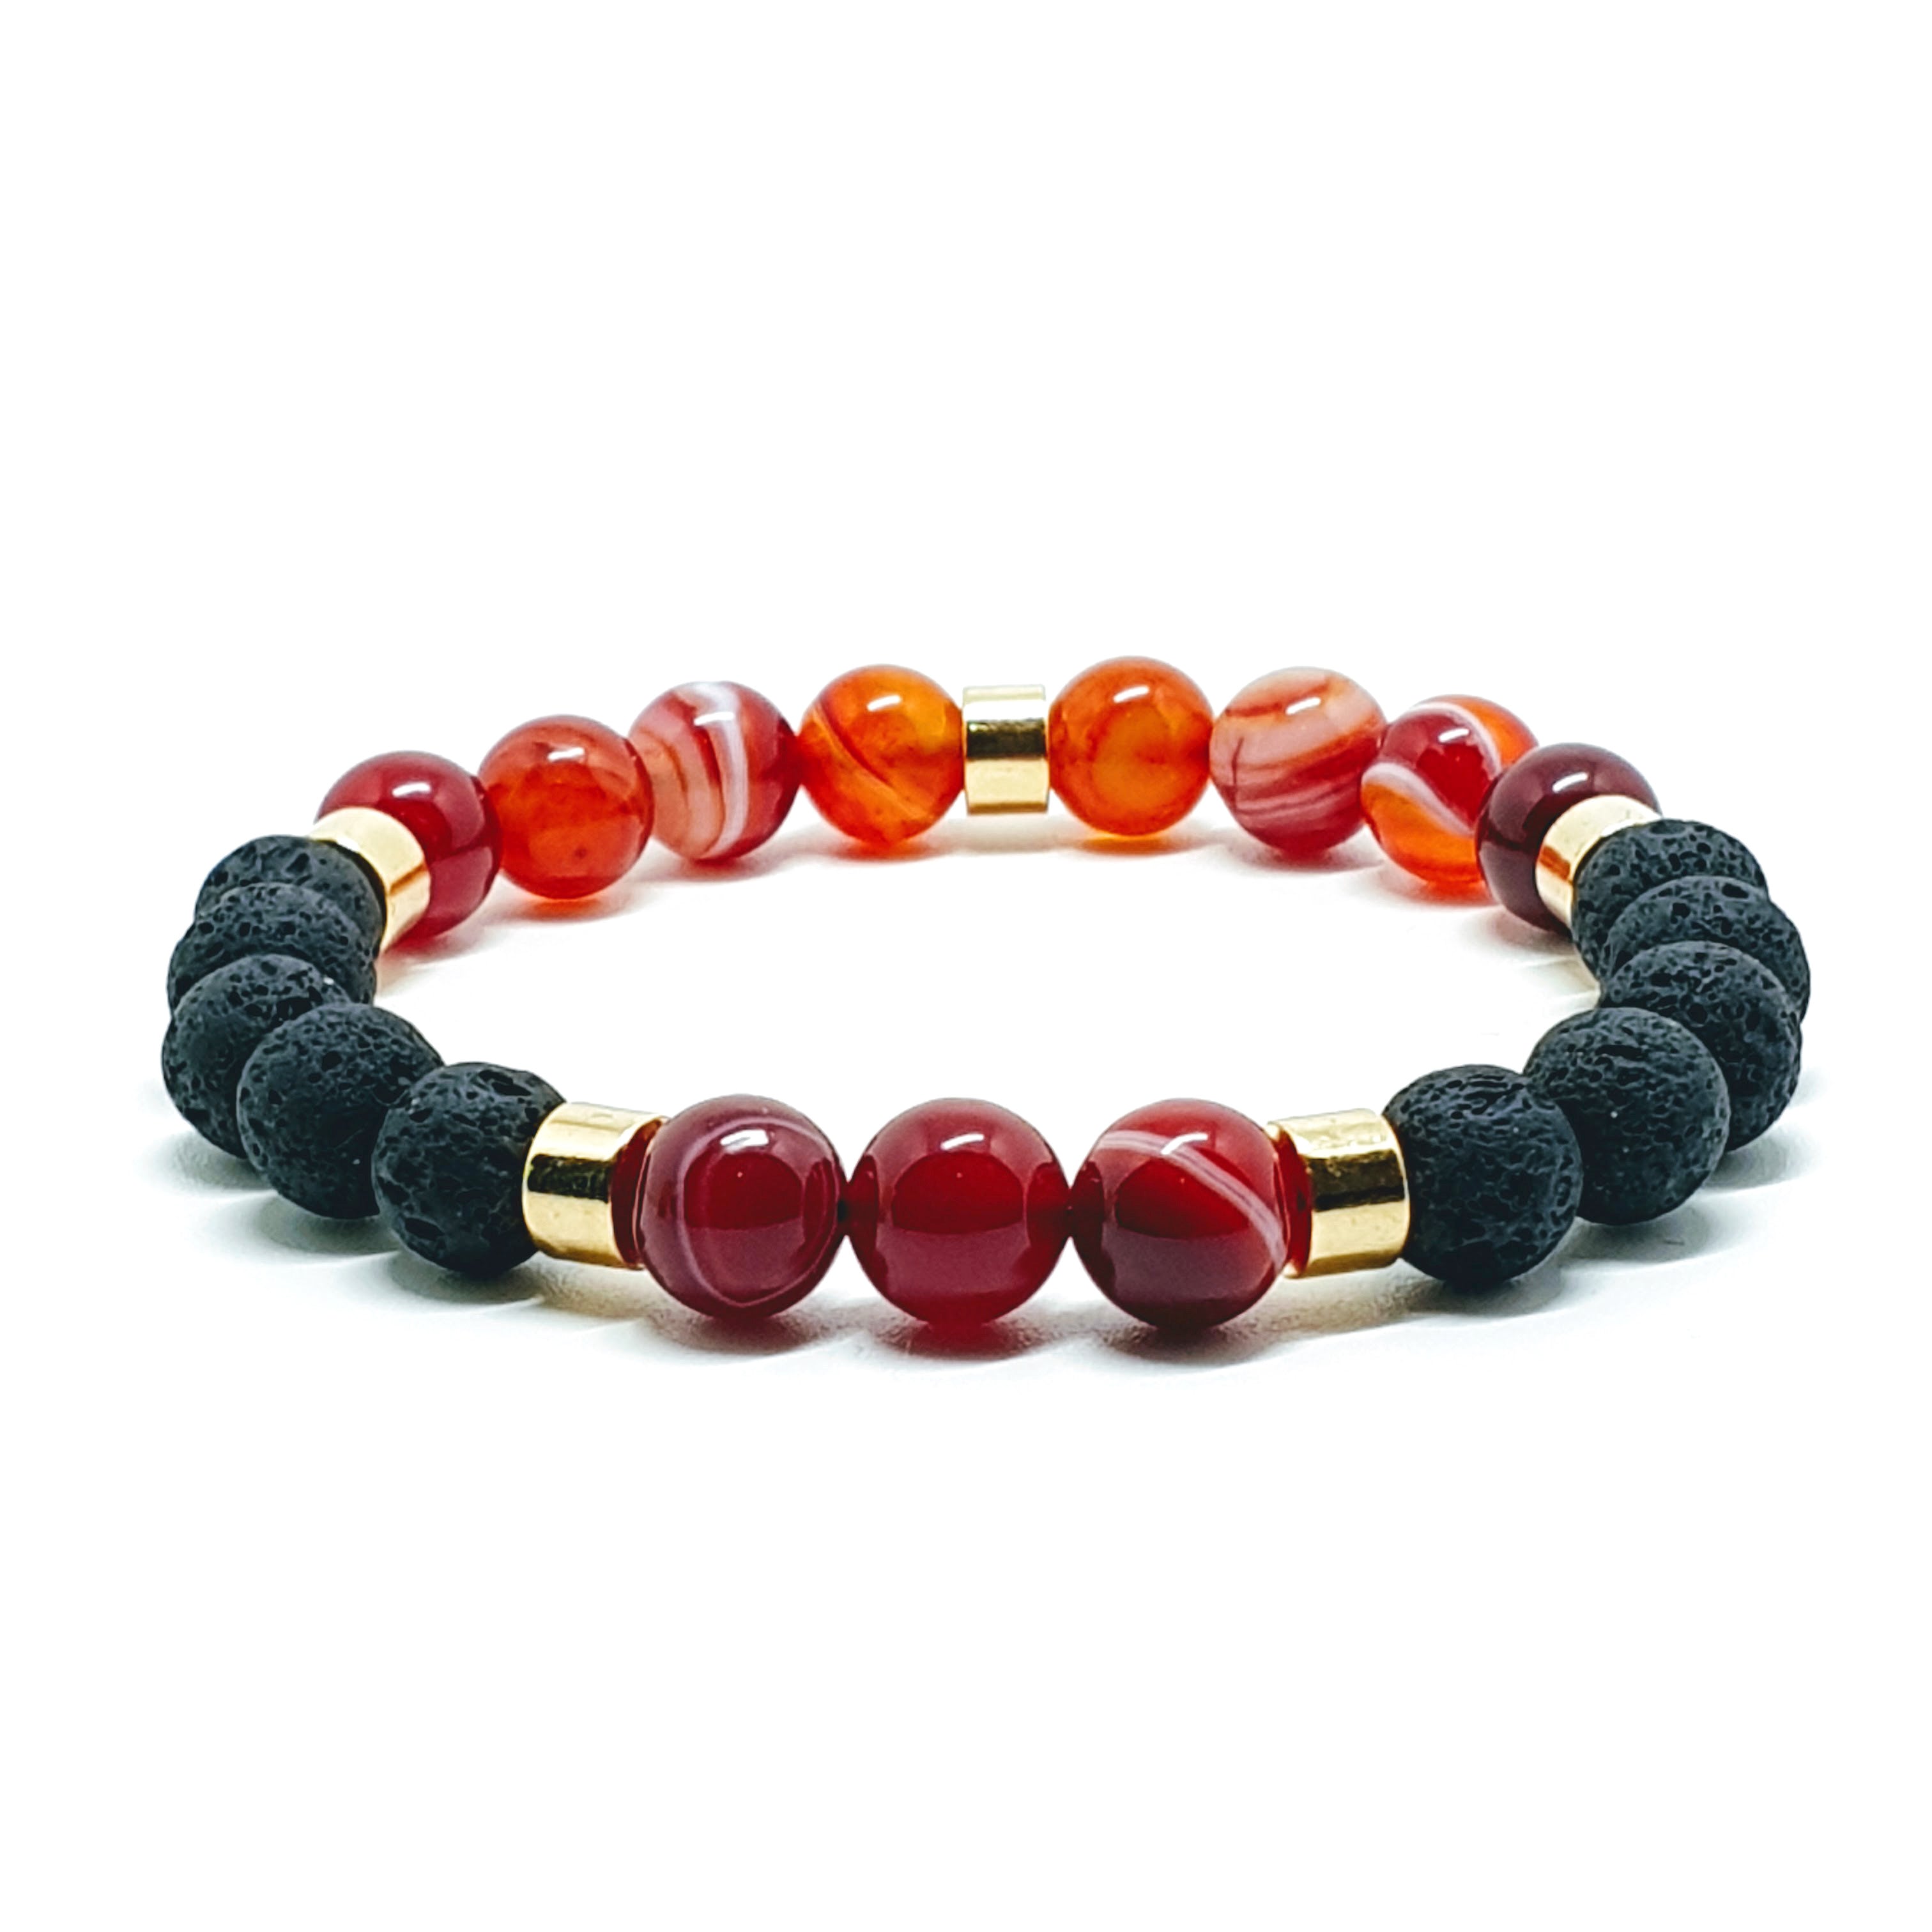 Red Agate and Lava Stone Energy Gemstone Bracelet